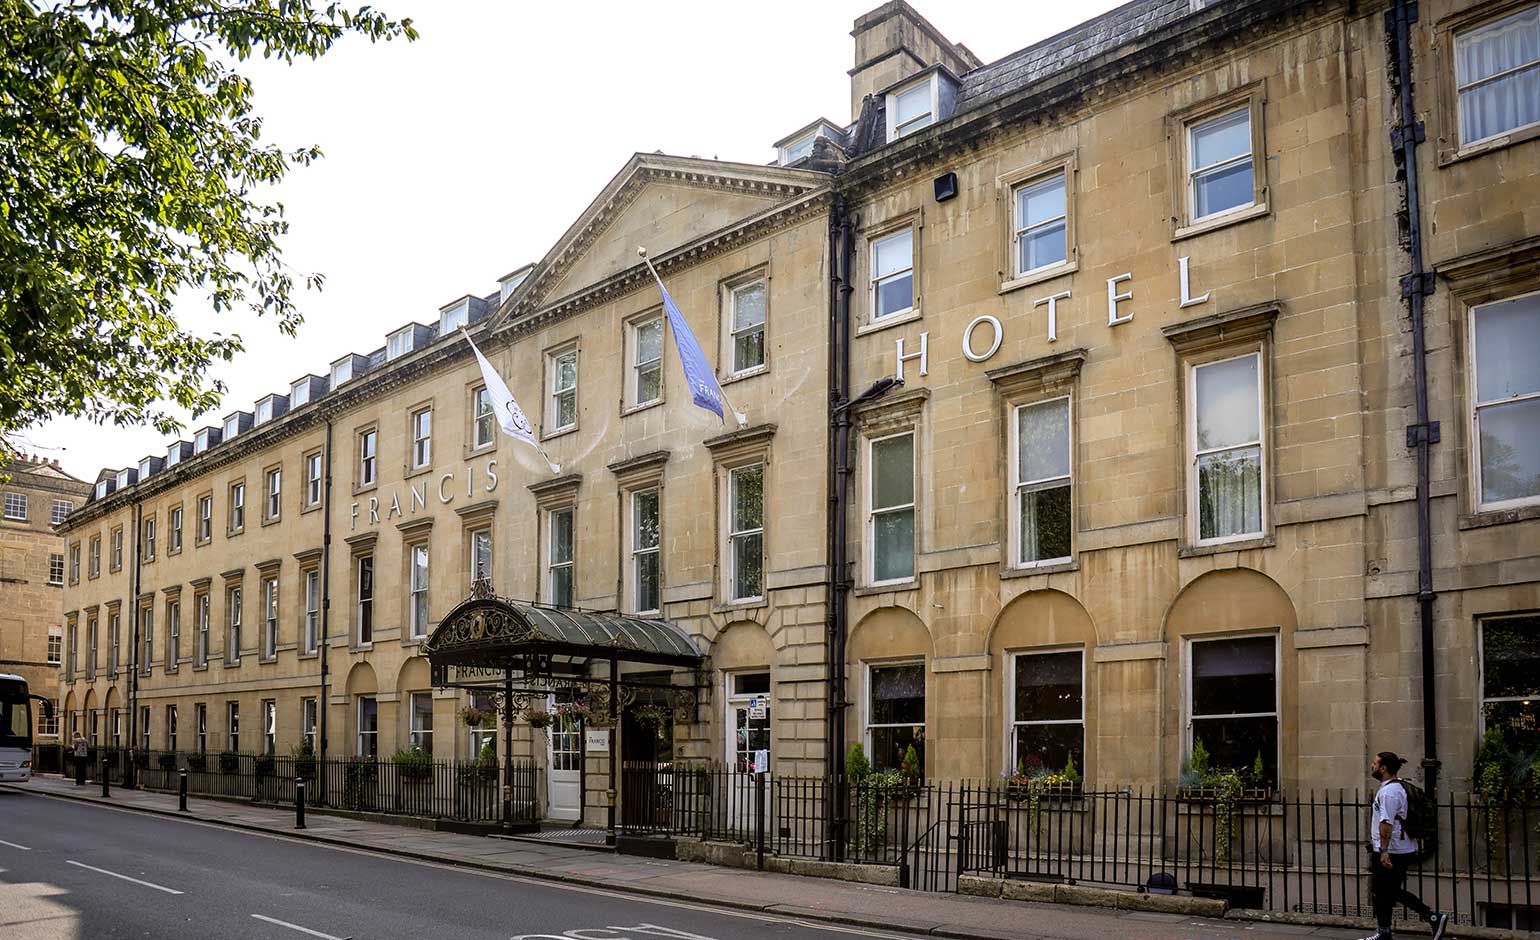 The Francis Hotel in Bath to undergo £13m 98-bedroom revamp